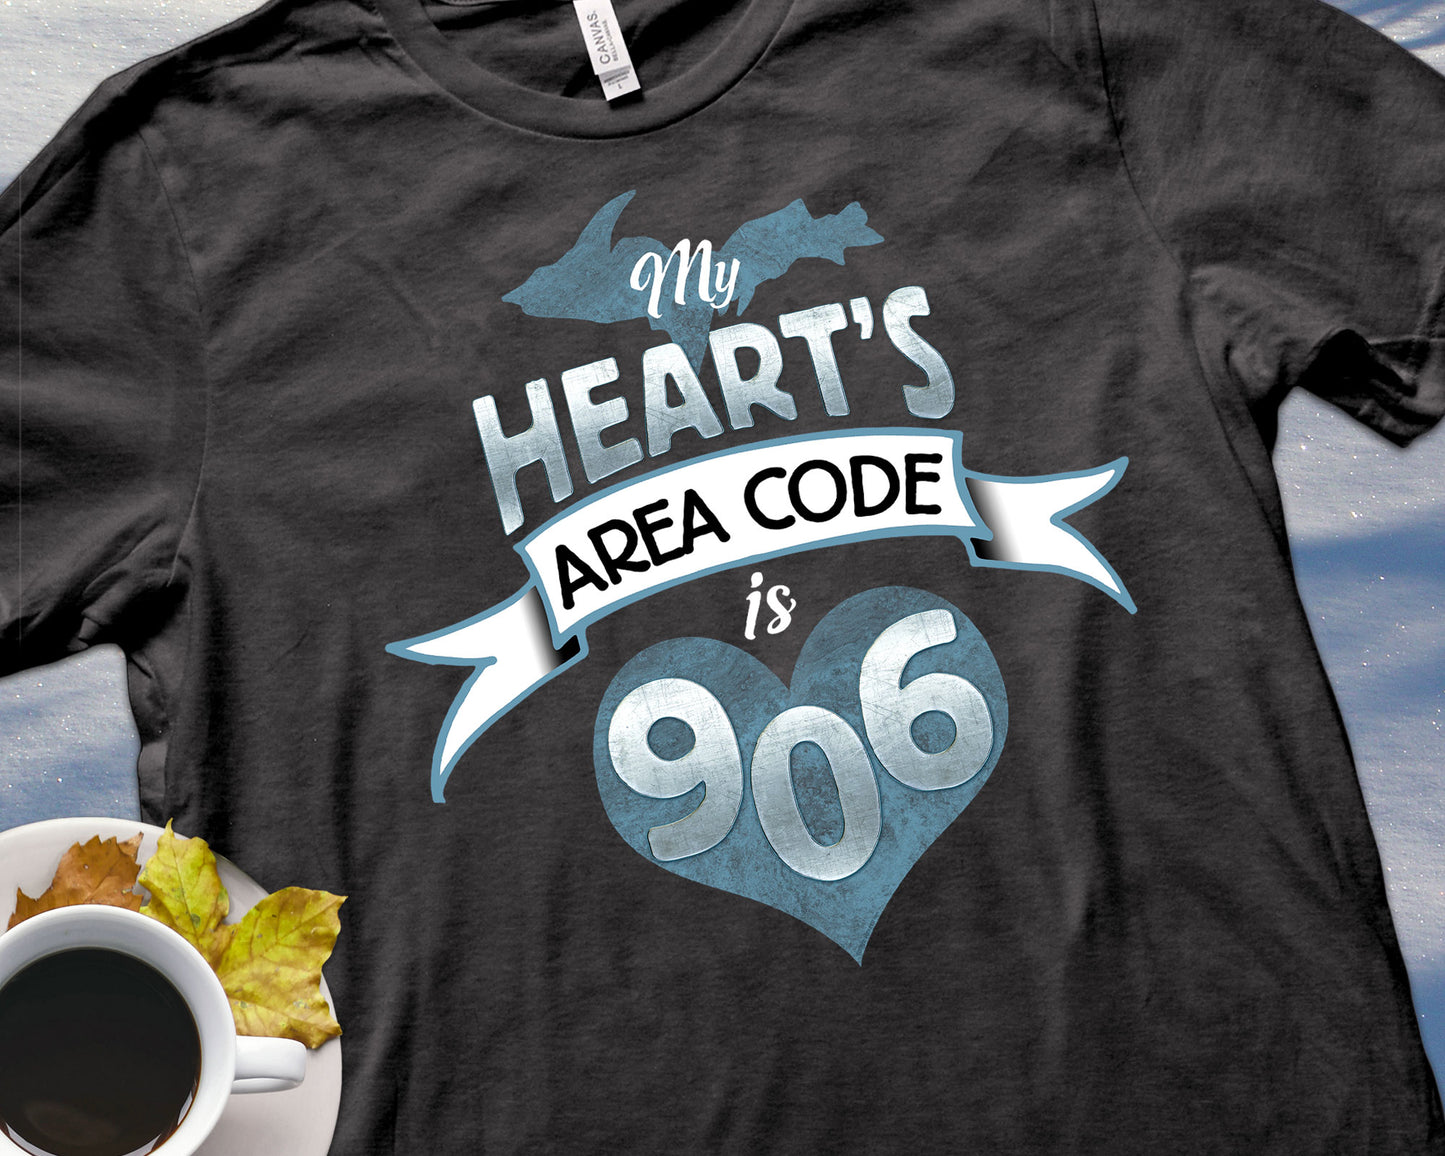 My Heart's Area Code is 906 Shirt | Yooper Gift | Upper Michigan T-shirt